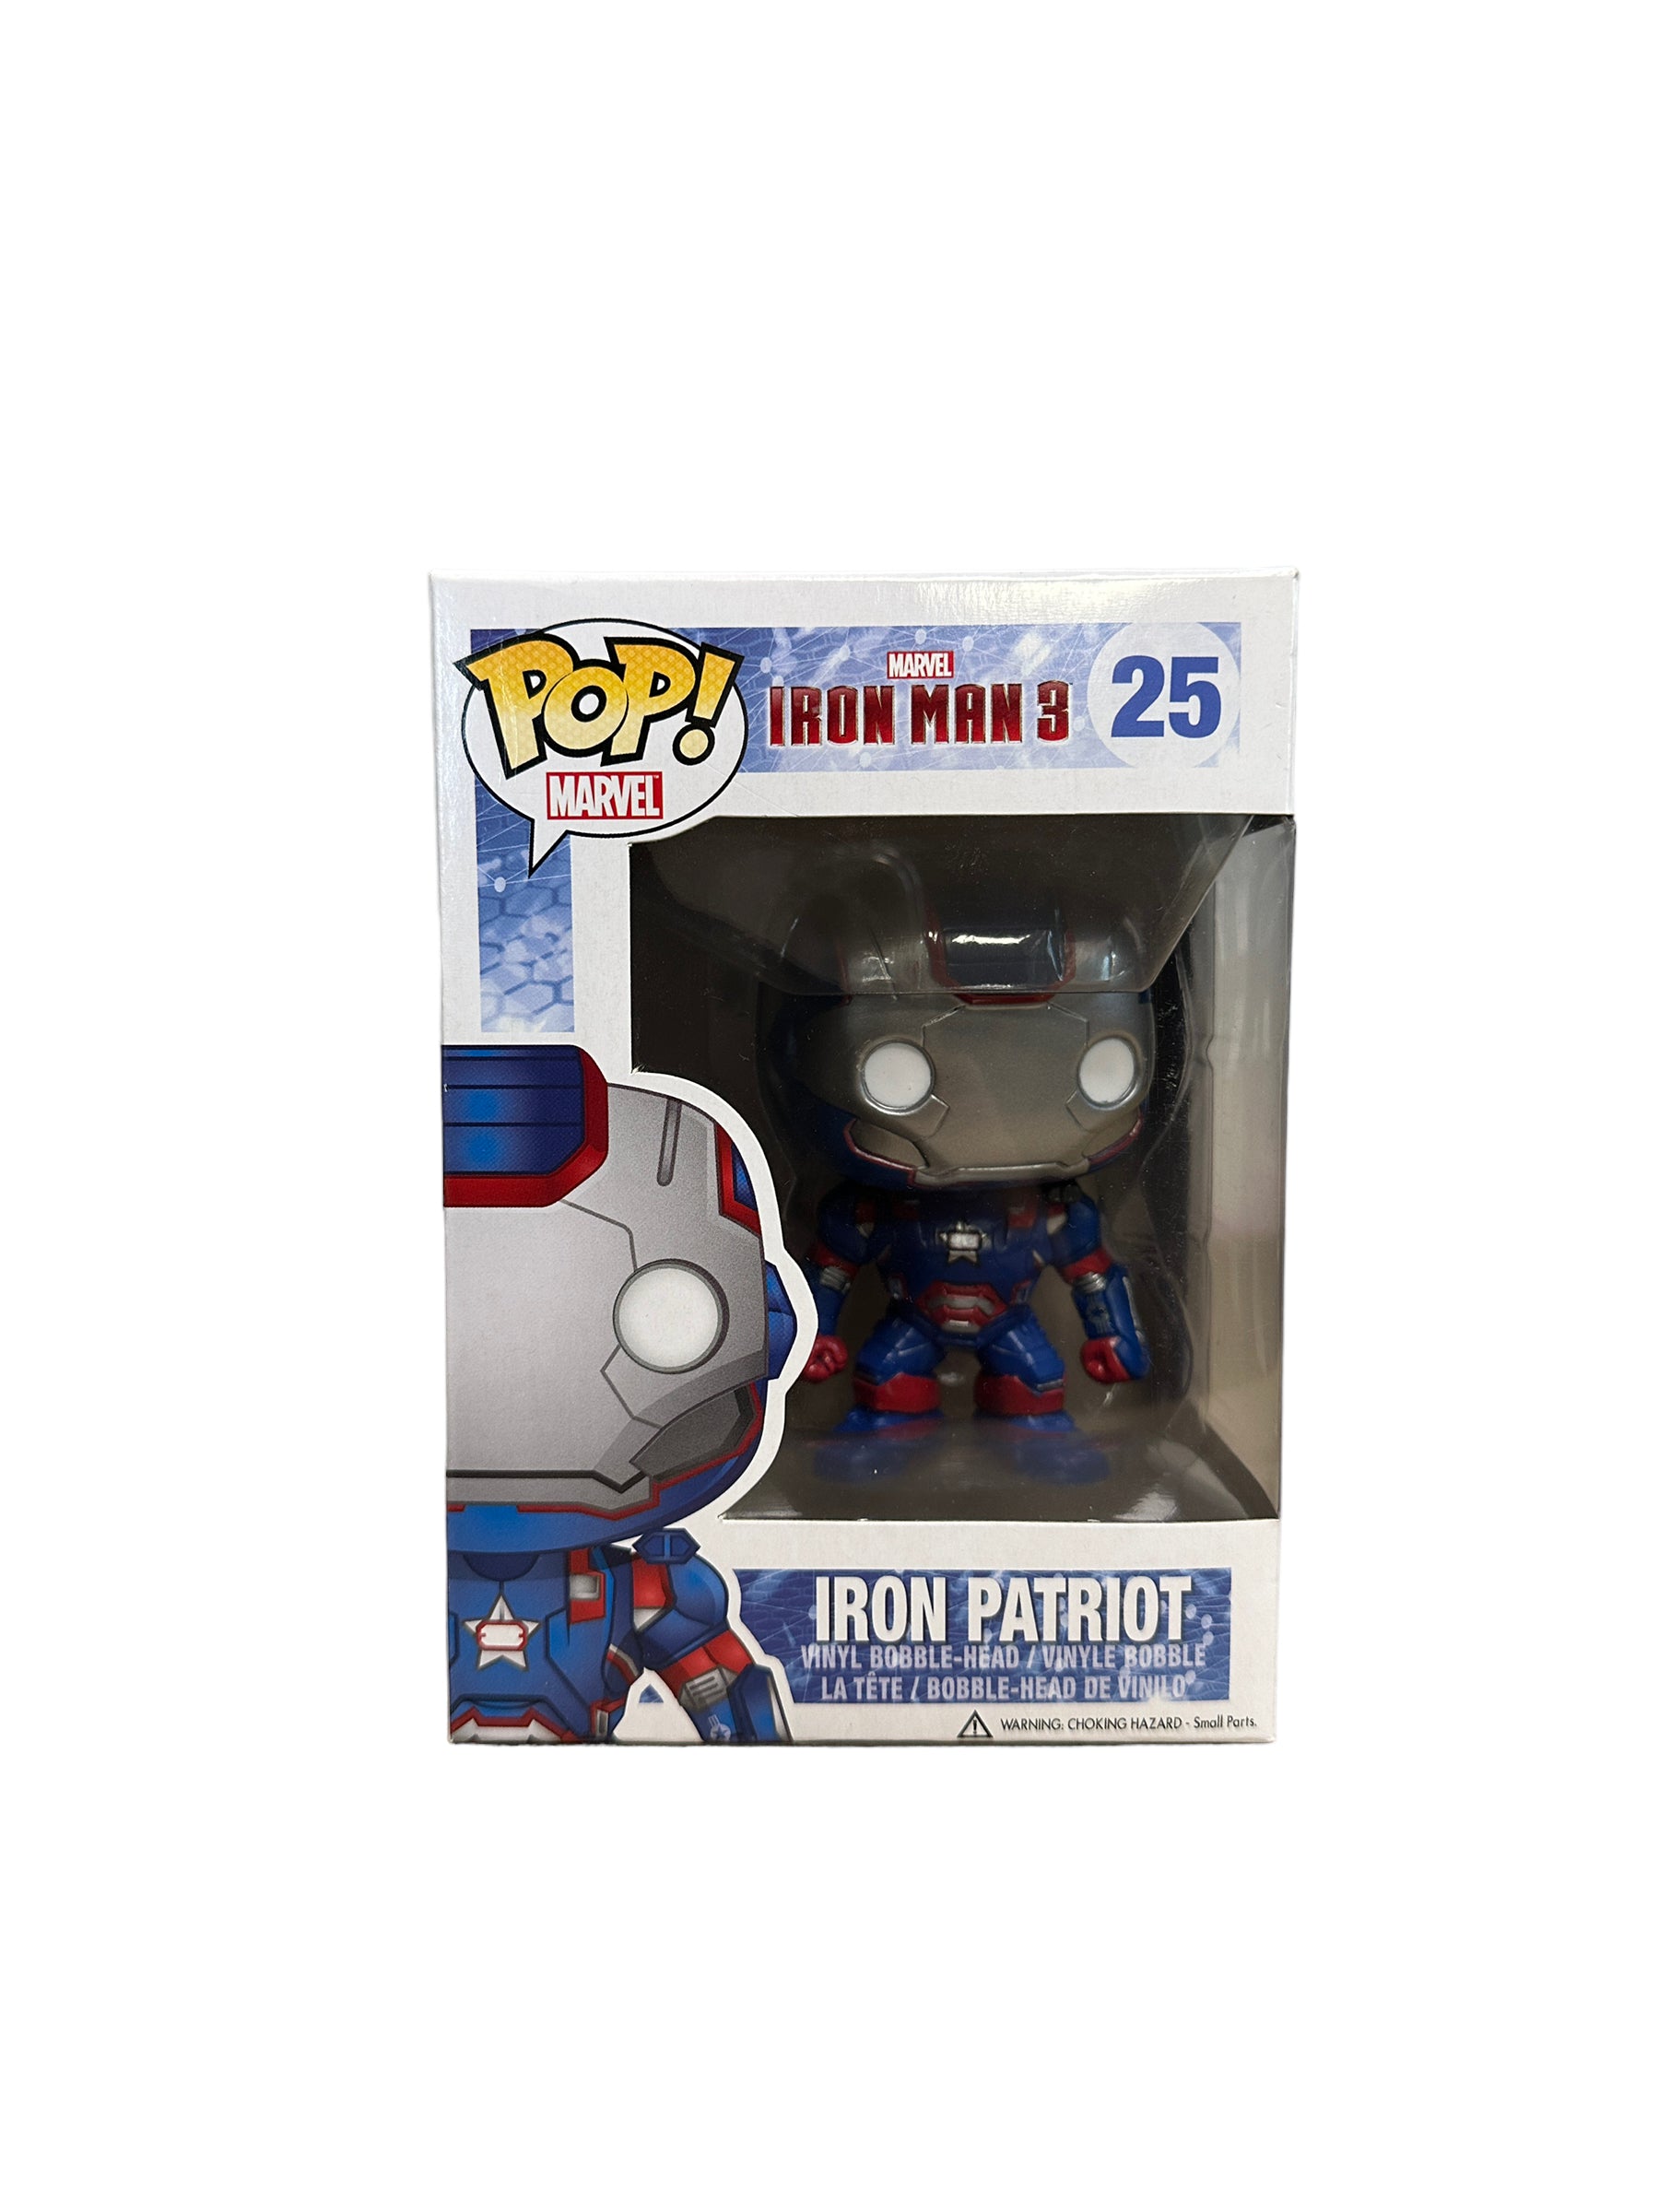 Iron Patriot #25 Funko Pop! - Iron Man 3 - 2013 Pop! - Condition 8.75/10